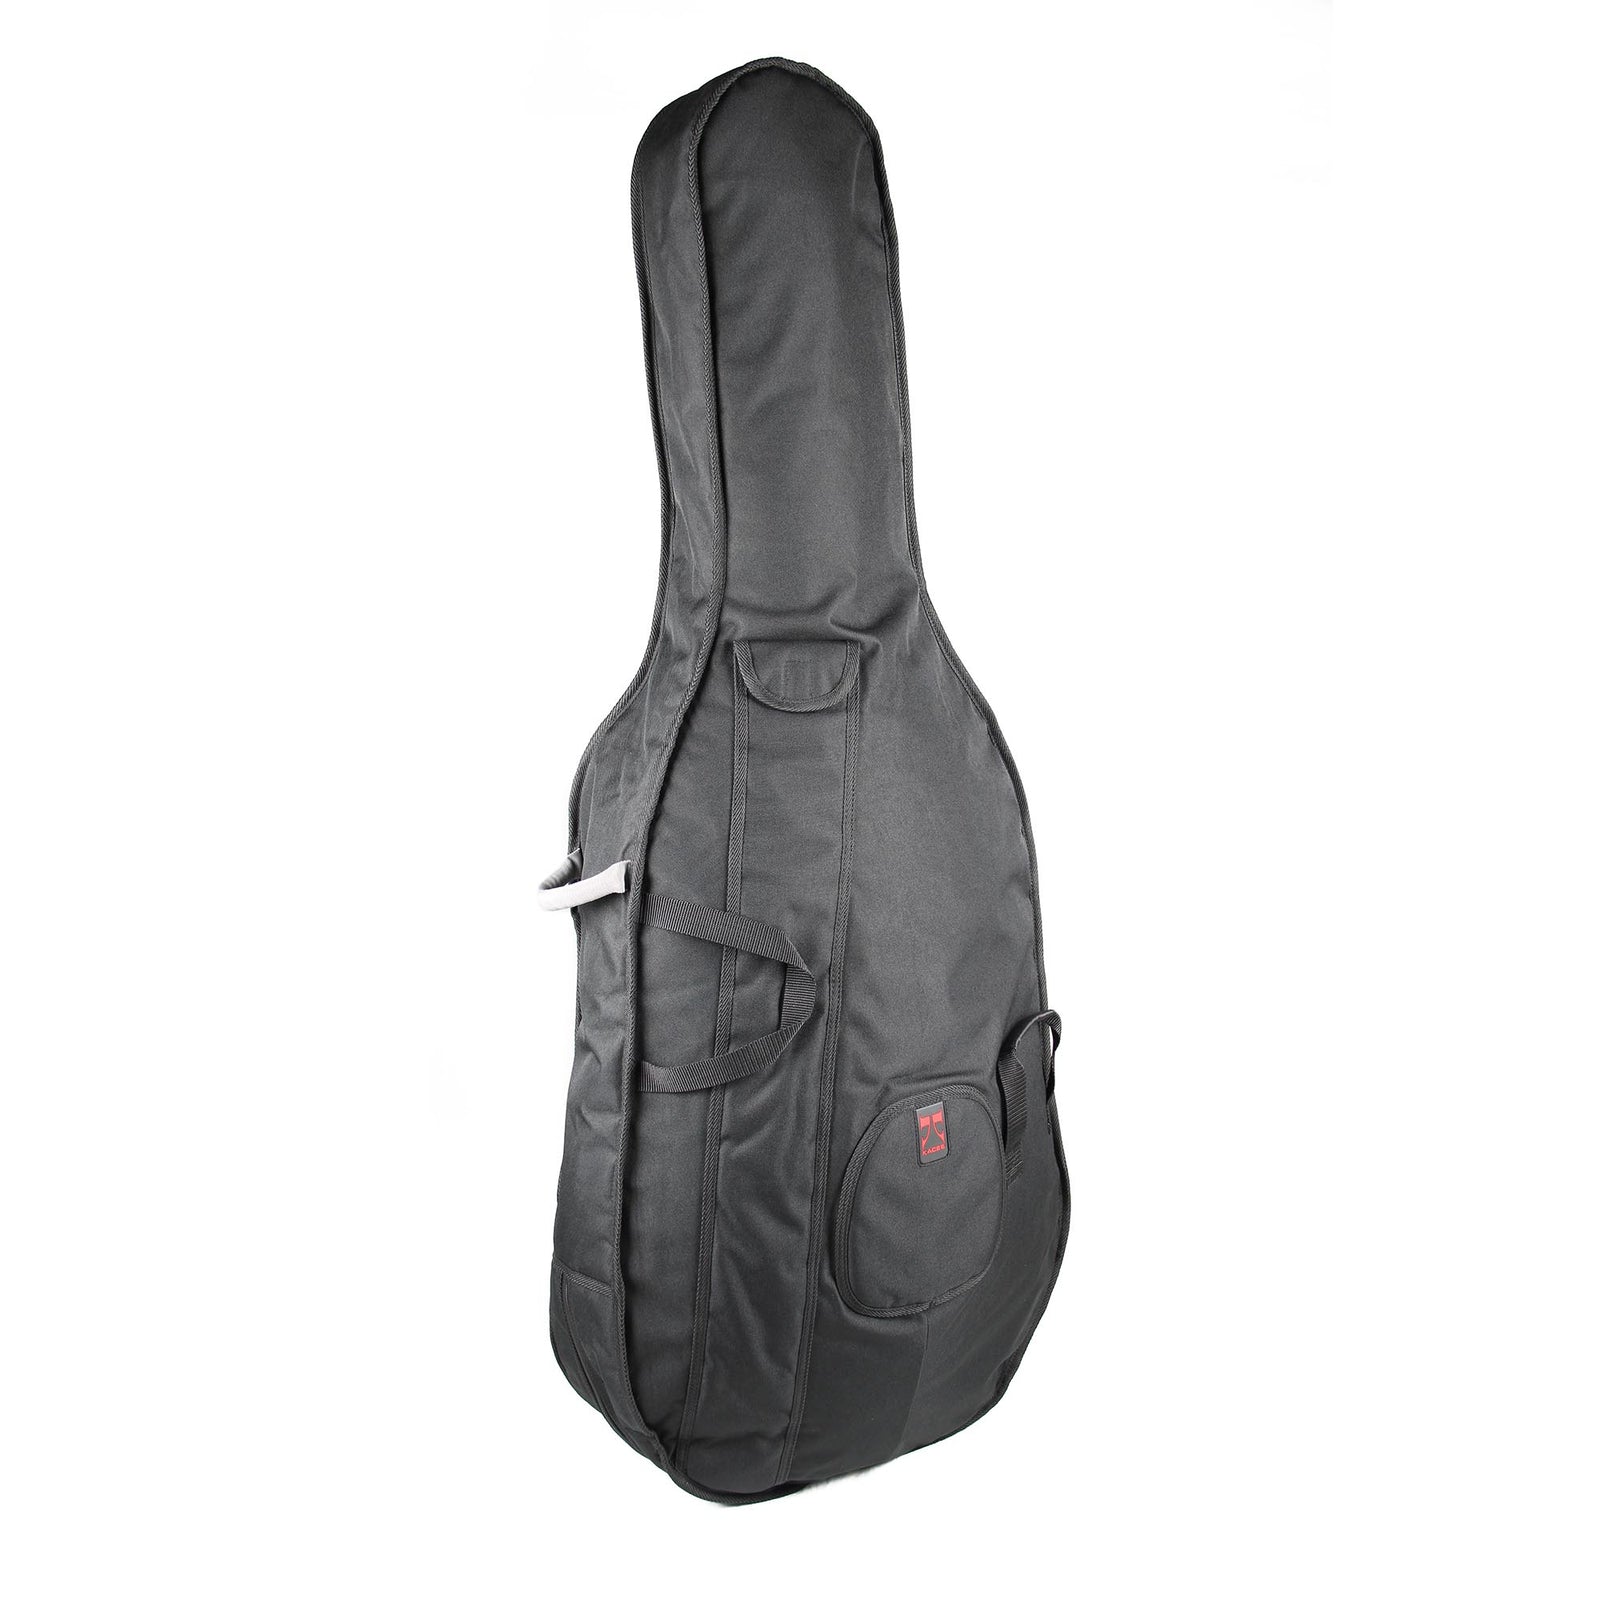 Kaces University Series 4/4 Size Cello Bag